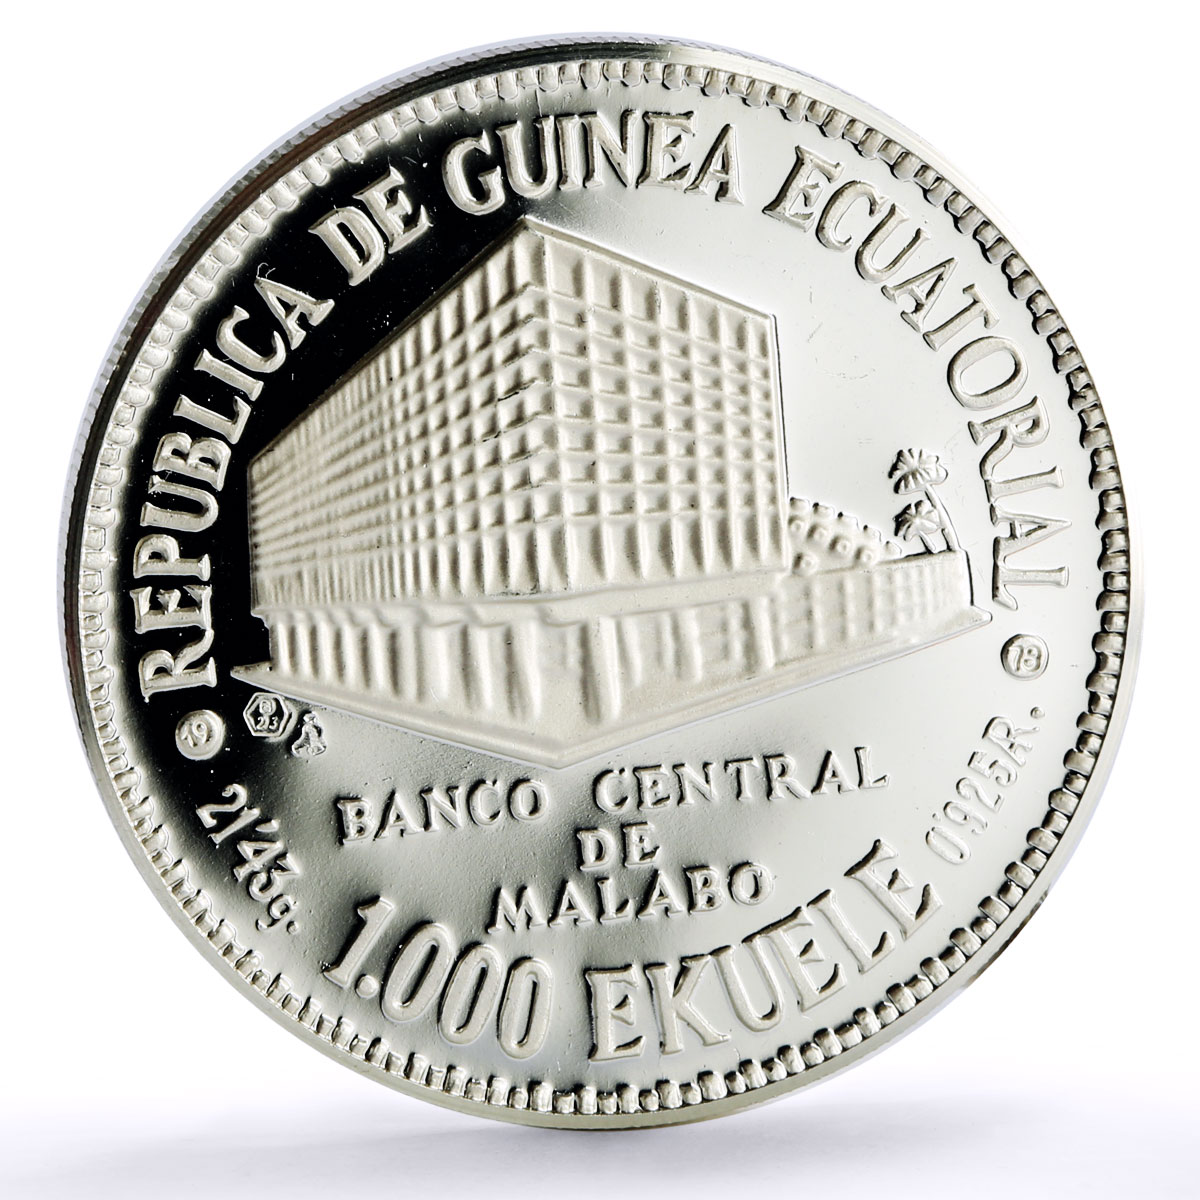 Equatorial Guinea 1000 ekuele Central Bank President Nguema Biyogo Ag coin 1978